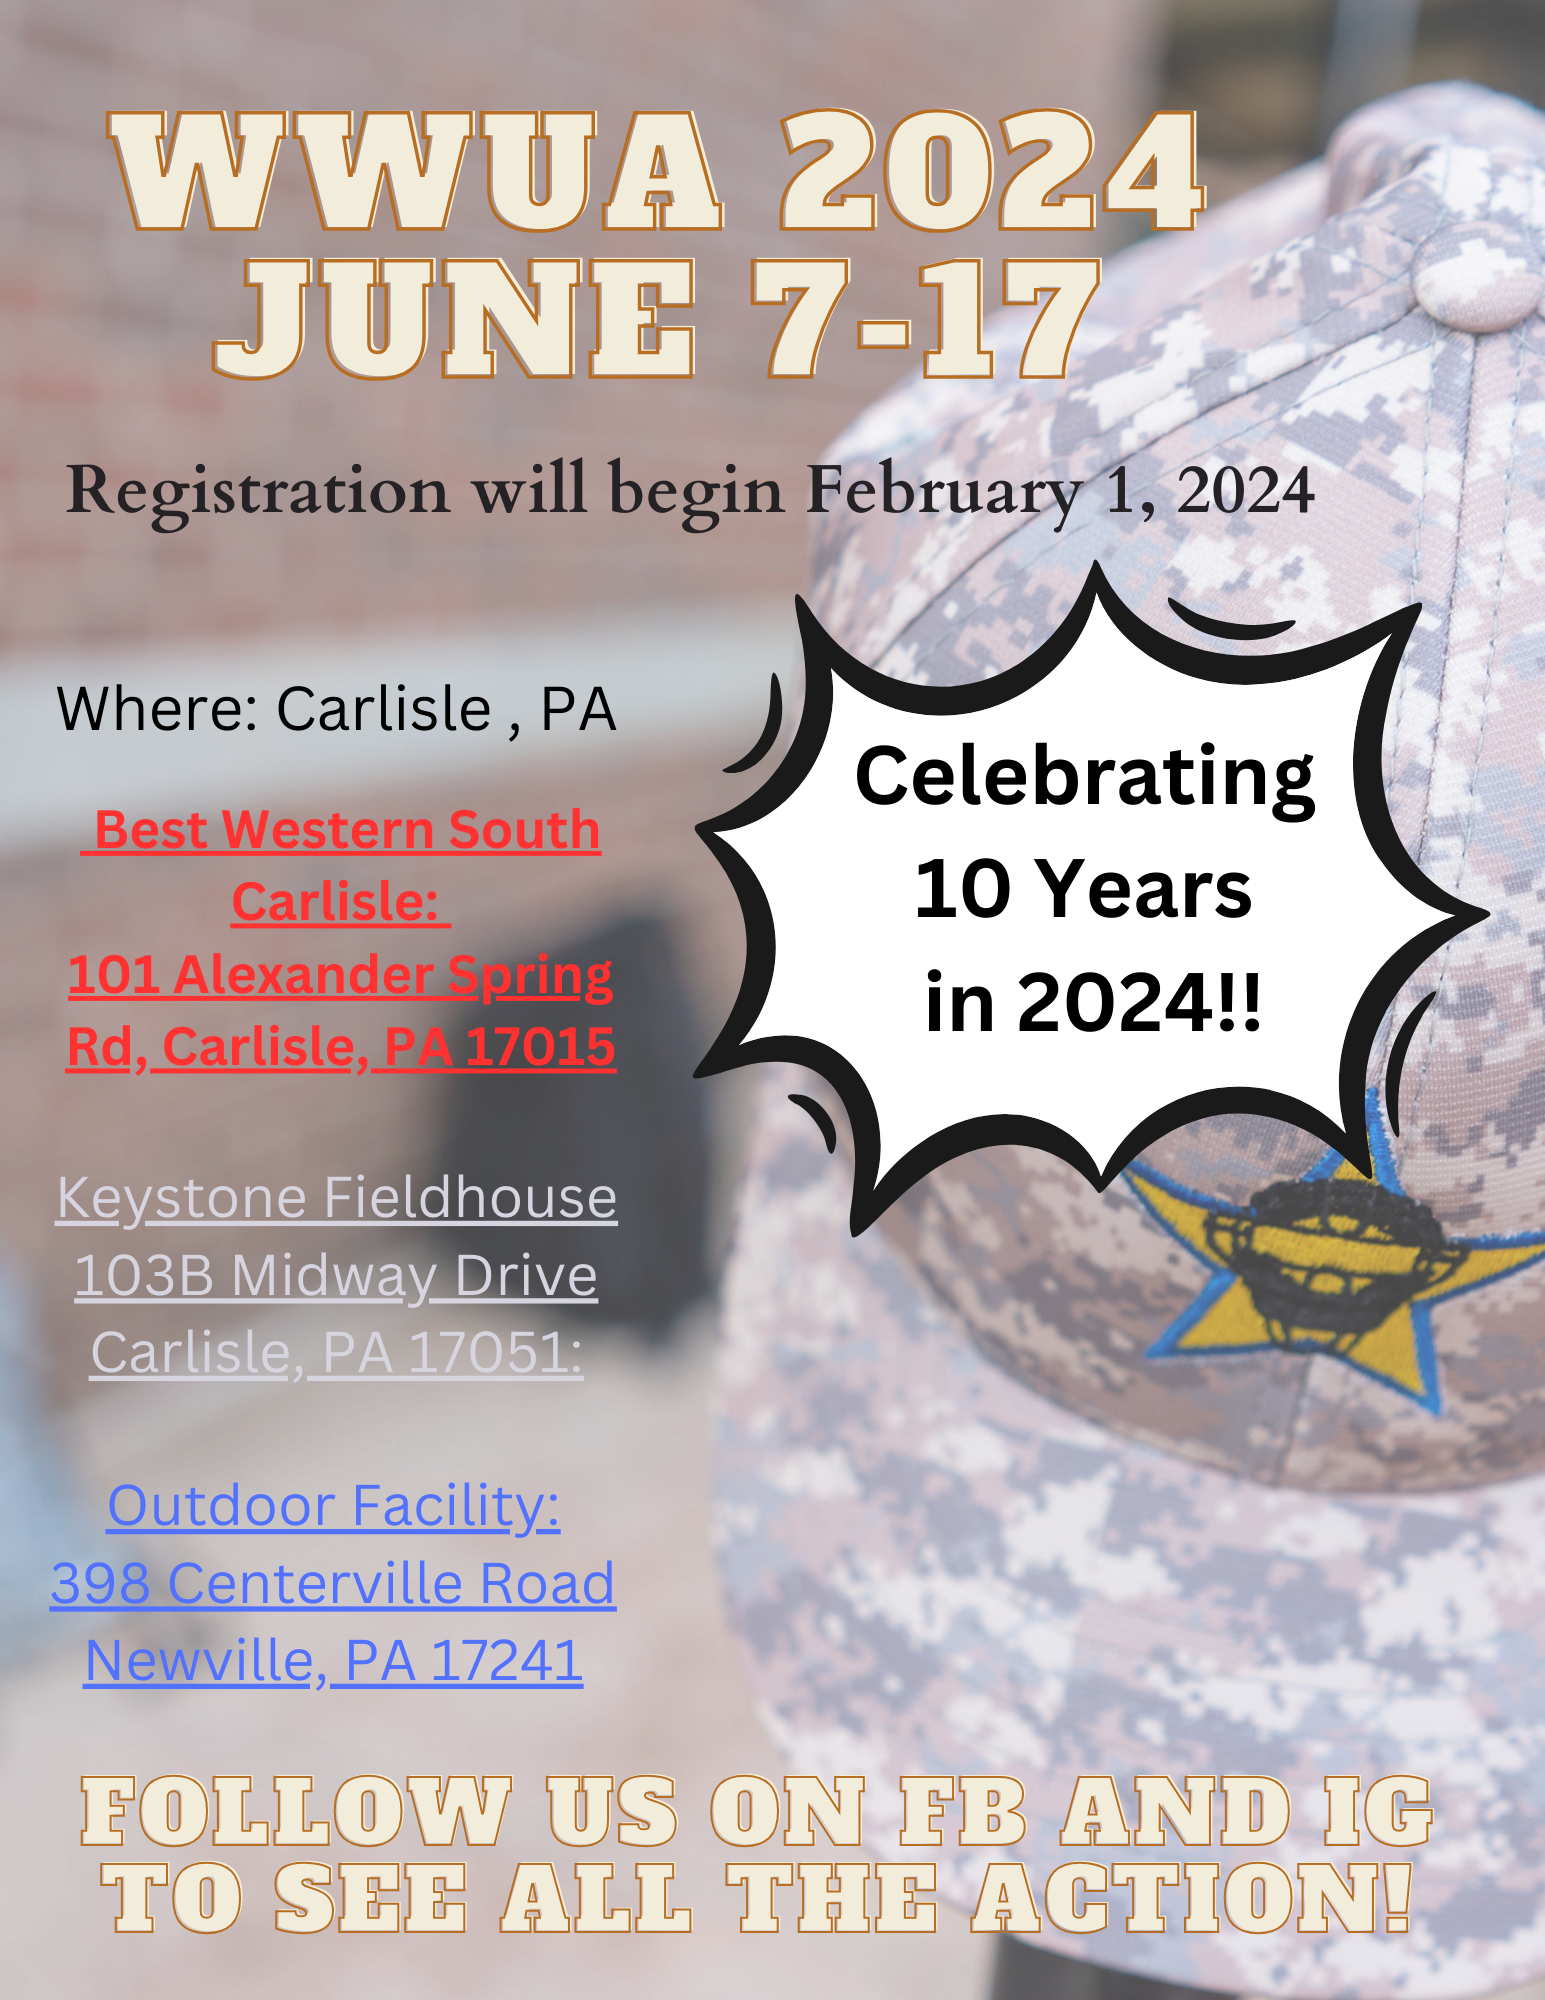 WWUA 2024 June 7-17 2024 in Carlisle PA